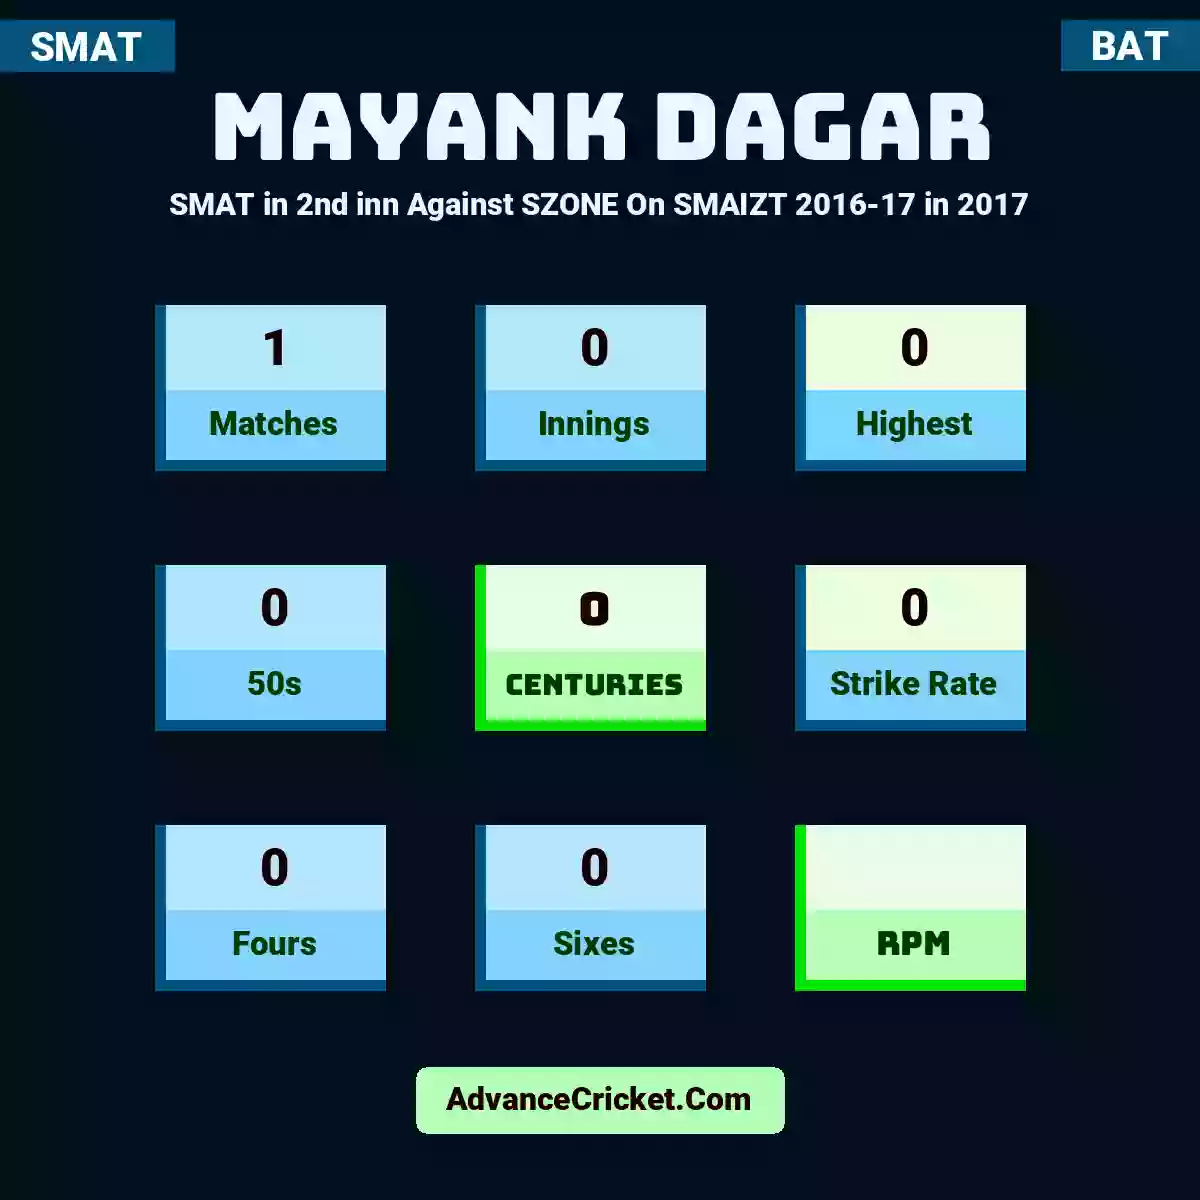 Mayank Dagar SMAT  in 2nd inn Against SZONE On SMAIZT 2016-17 in 2017, Mayank Dagar played 1 matches, scored 0 runs as highest, 0 half-centuries, and 0 centuries, with a strike rate of 0. M.Dagar hit 0 fours and 0 sixes.